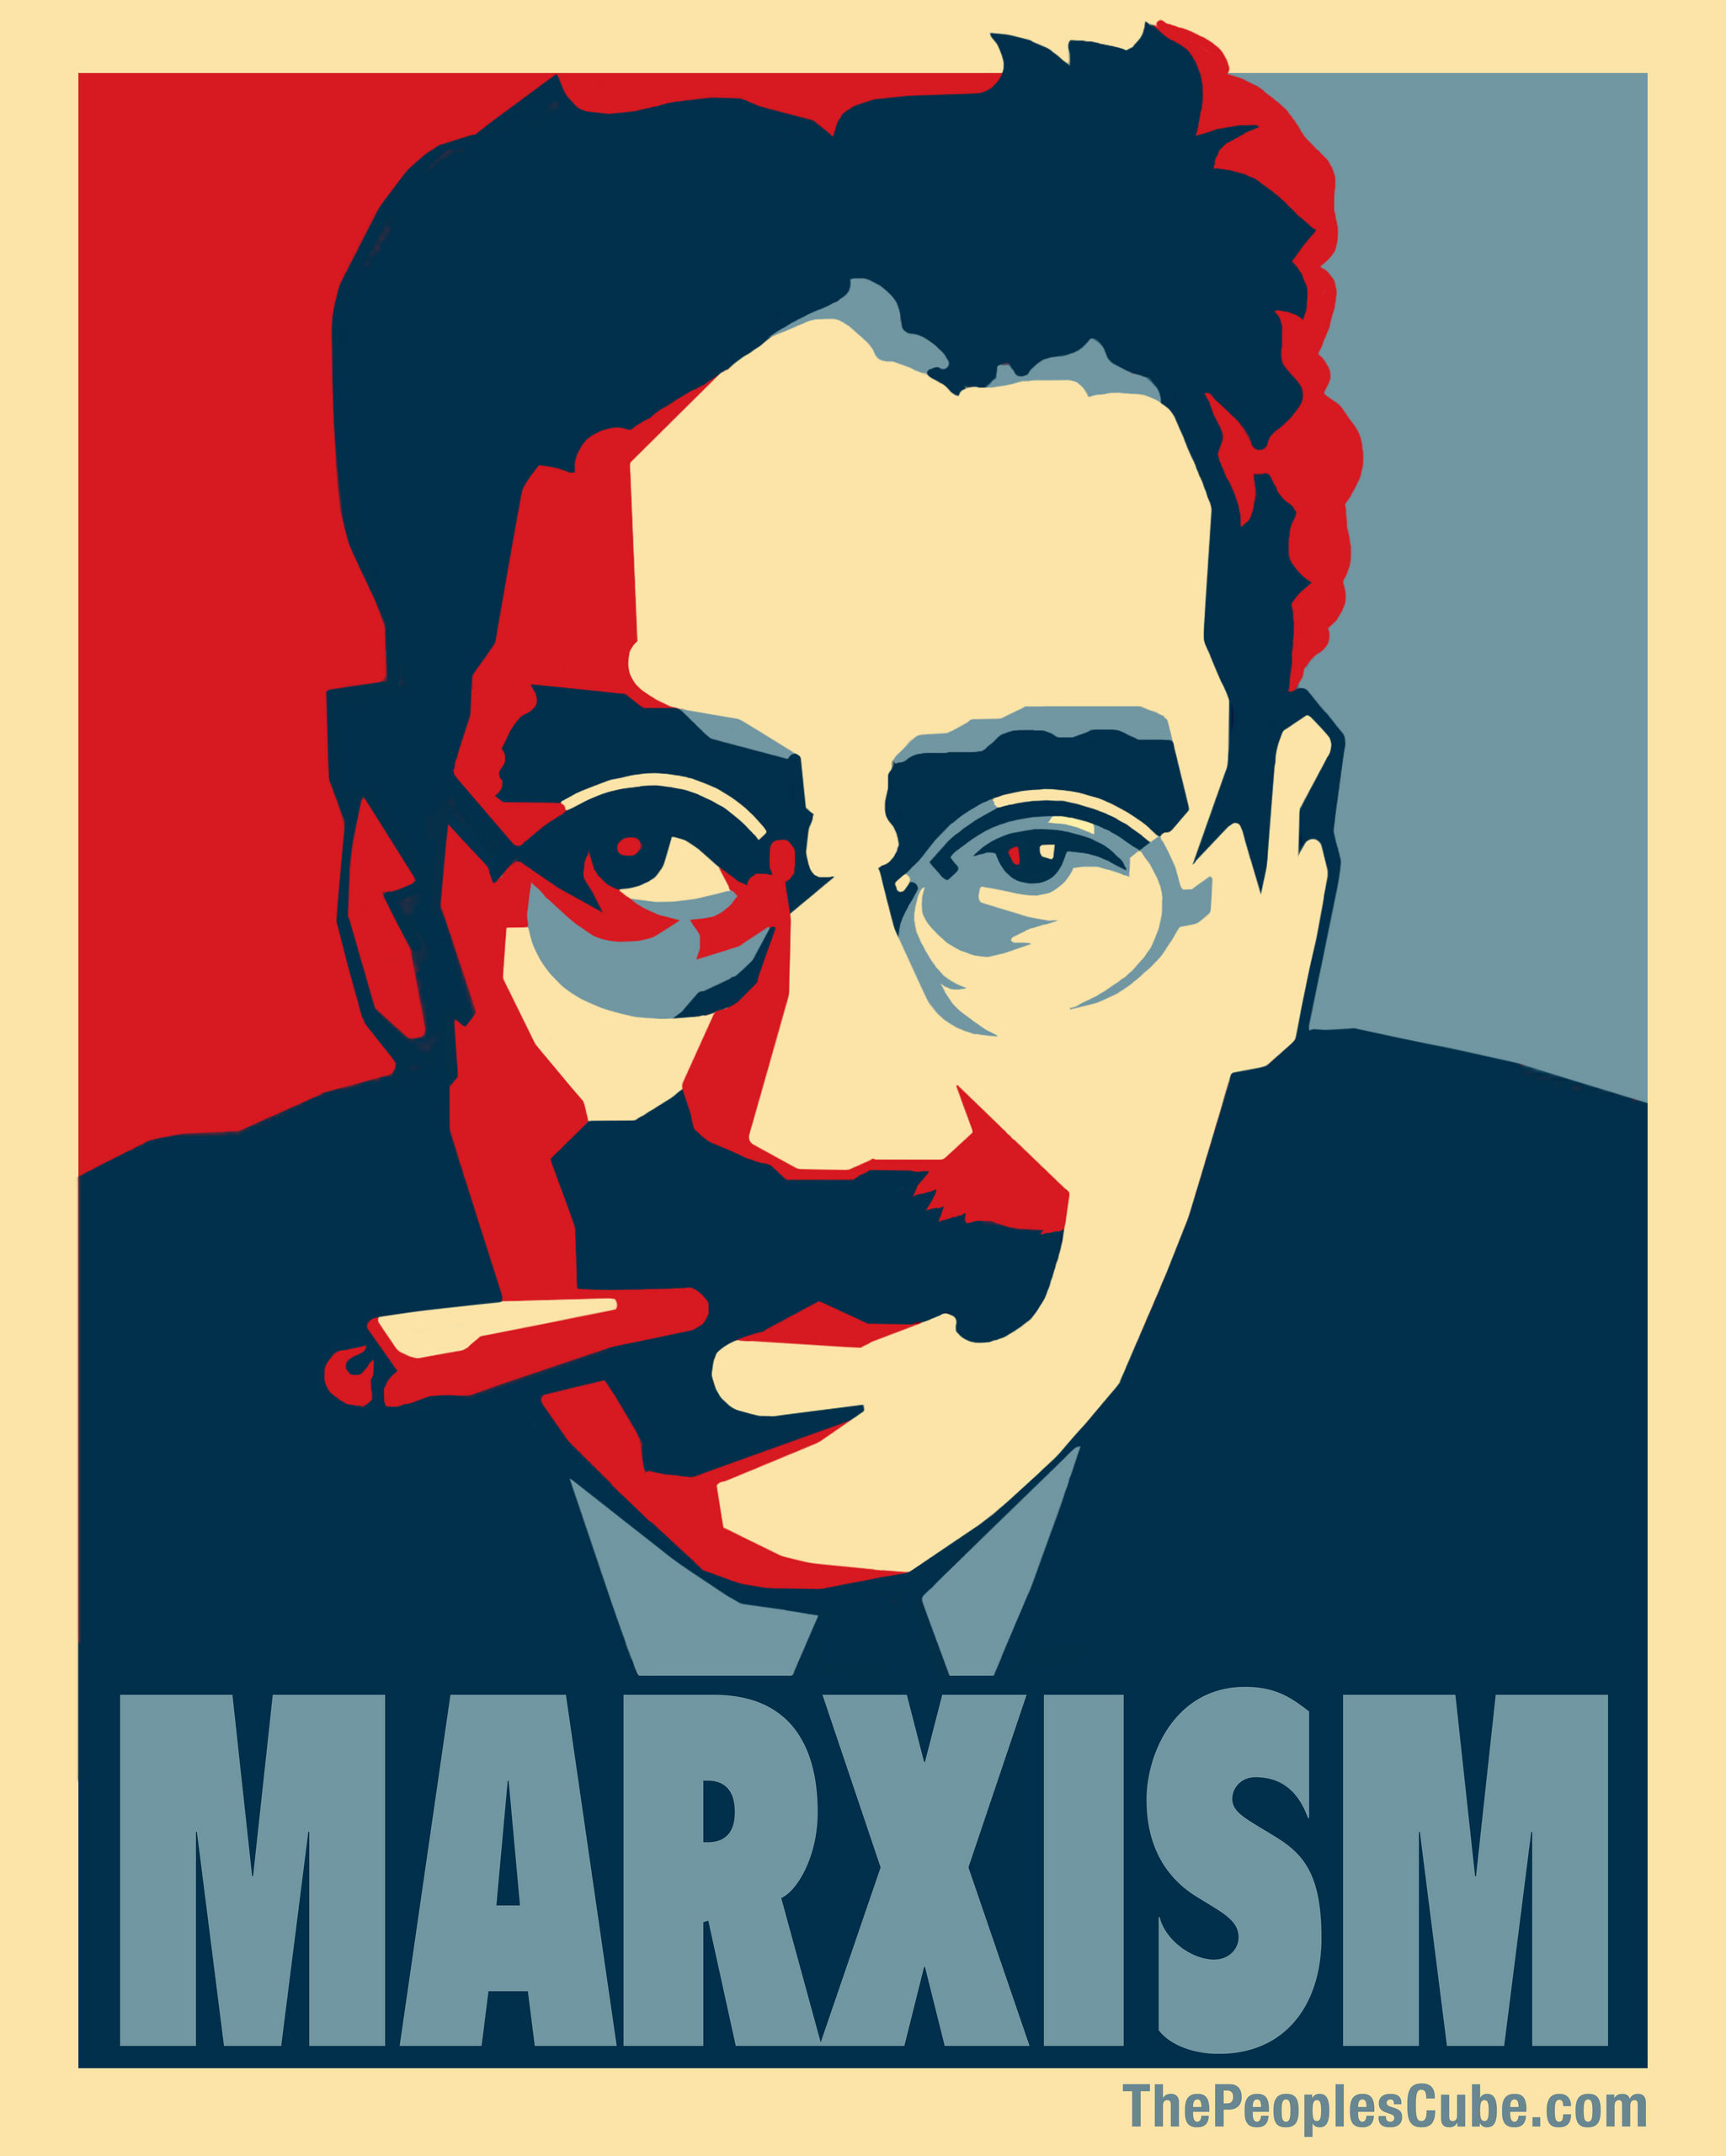 Marxism-marx-brothers-9268845-2050-2560.jpg